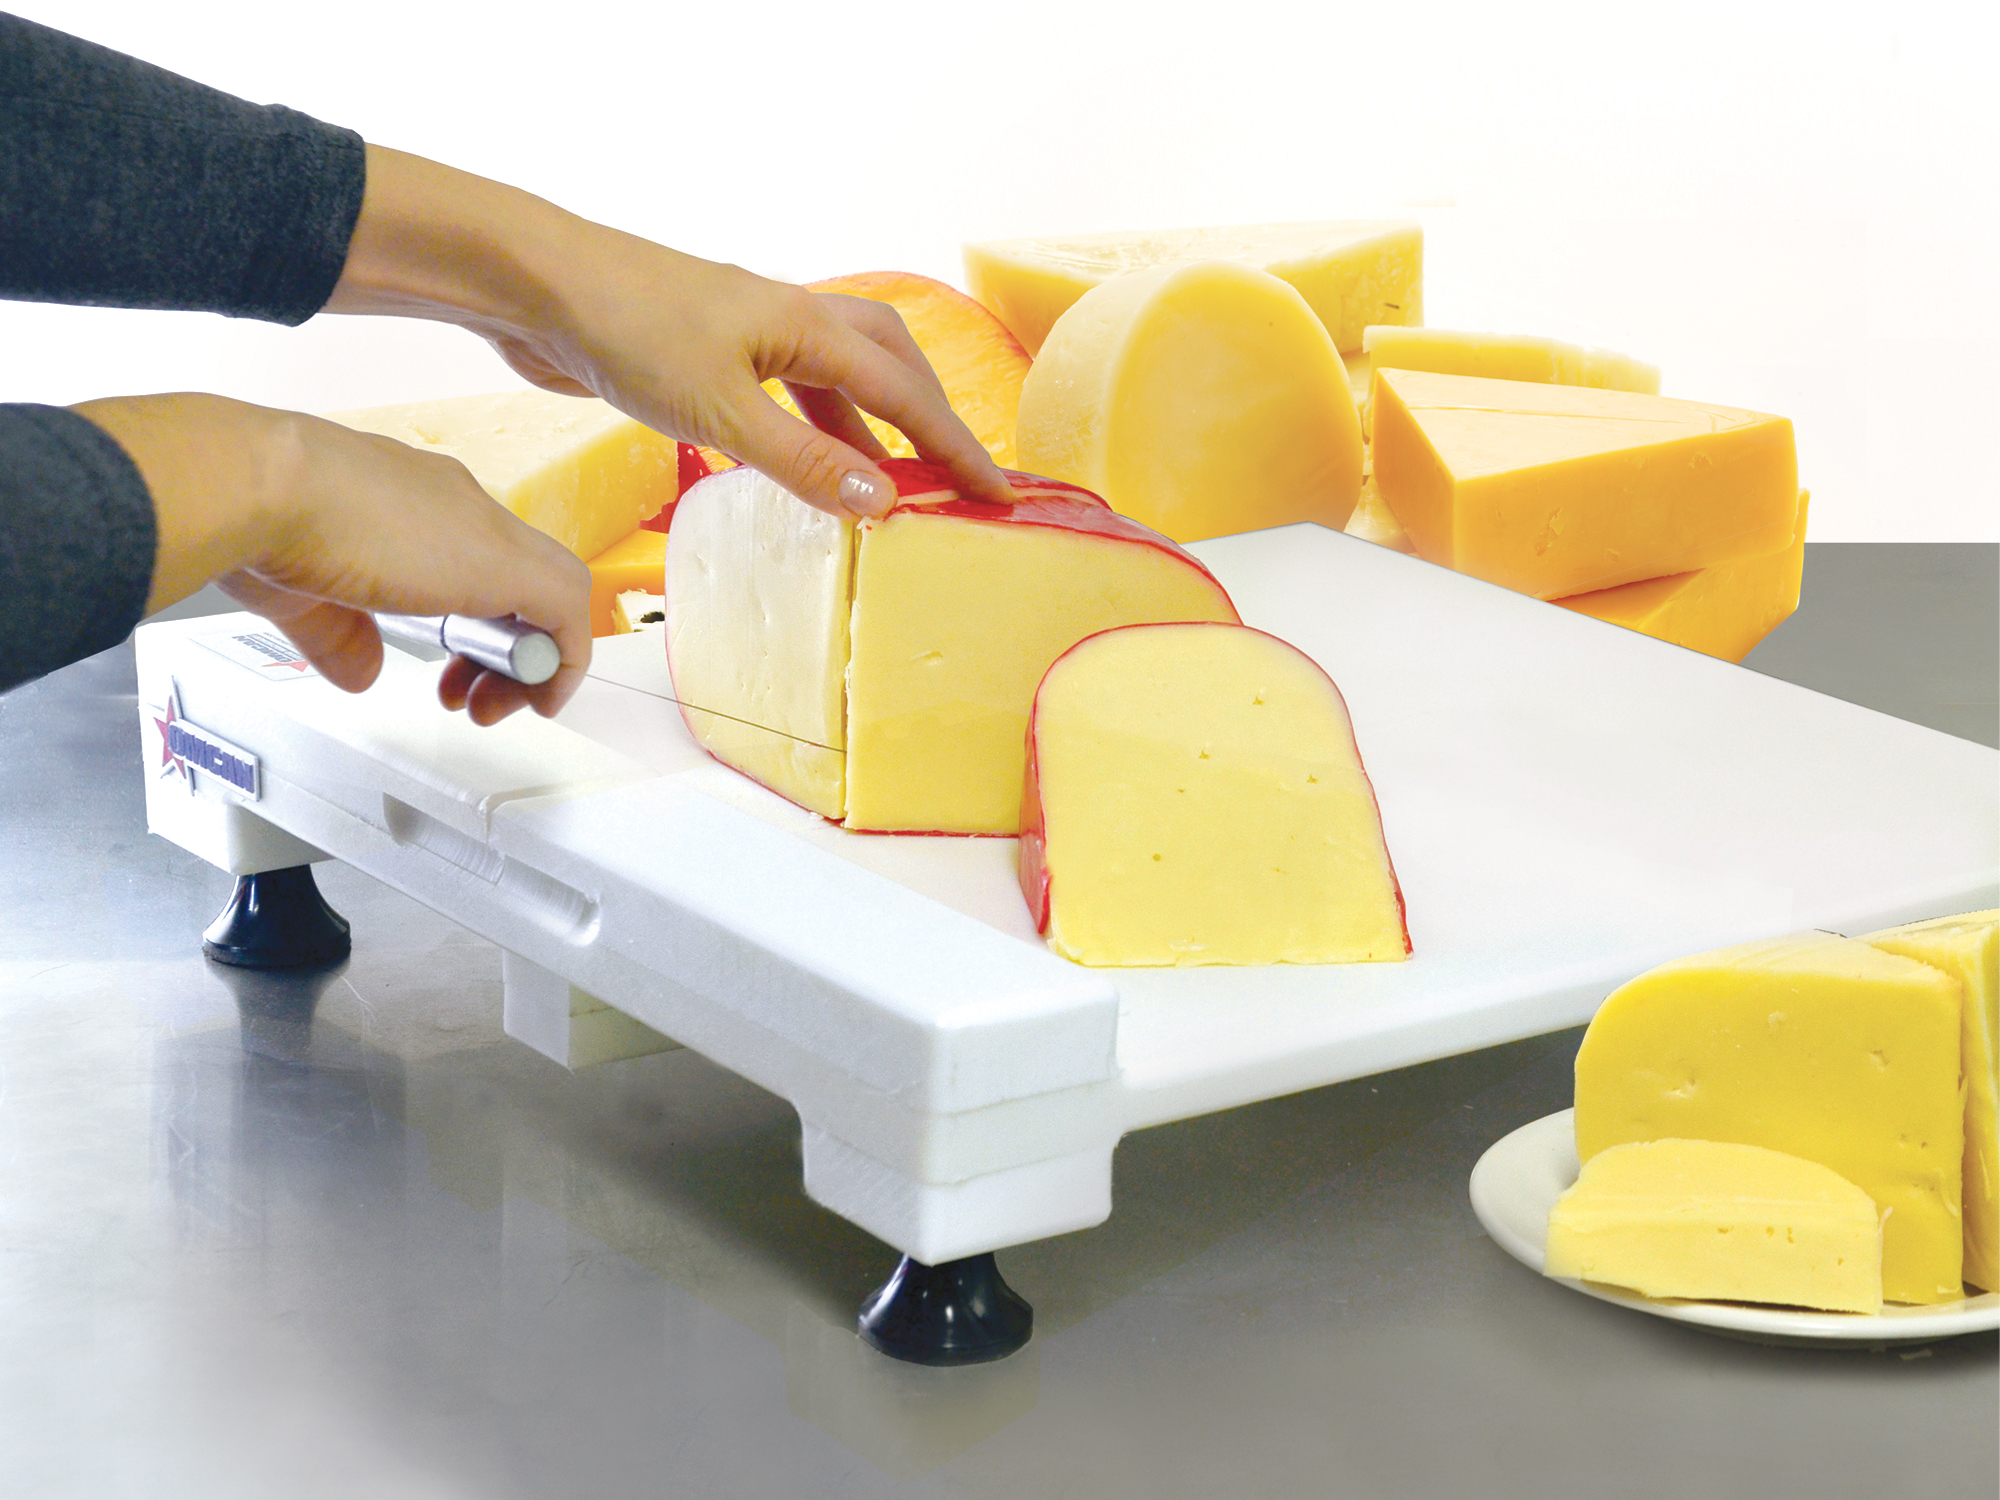 Cheese Cutter By Mario- Omcan's Heavy Duty Cheese Blocker 